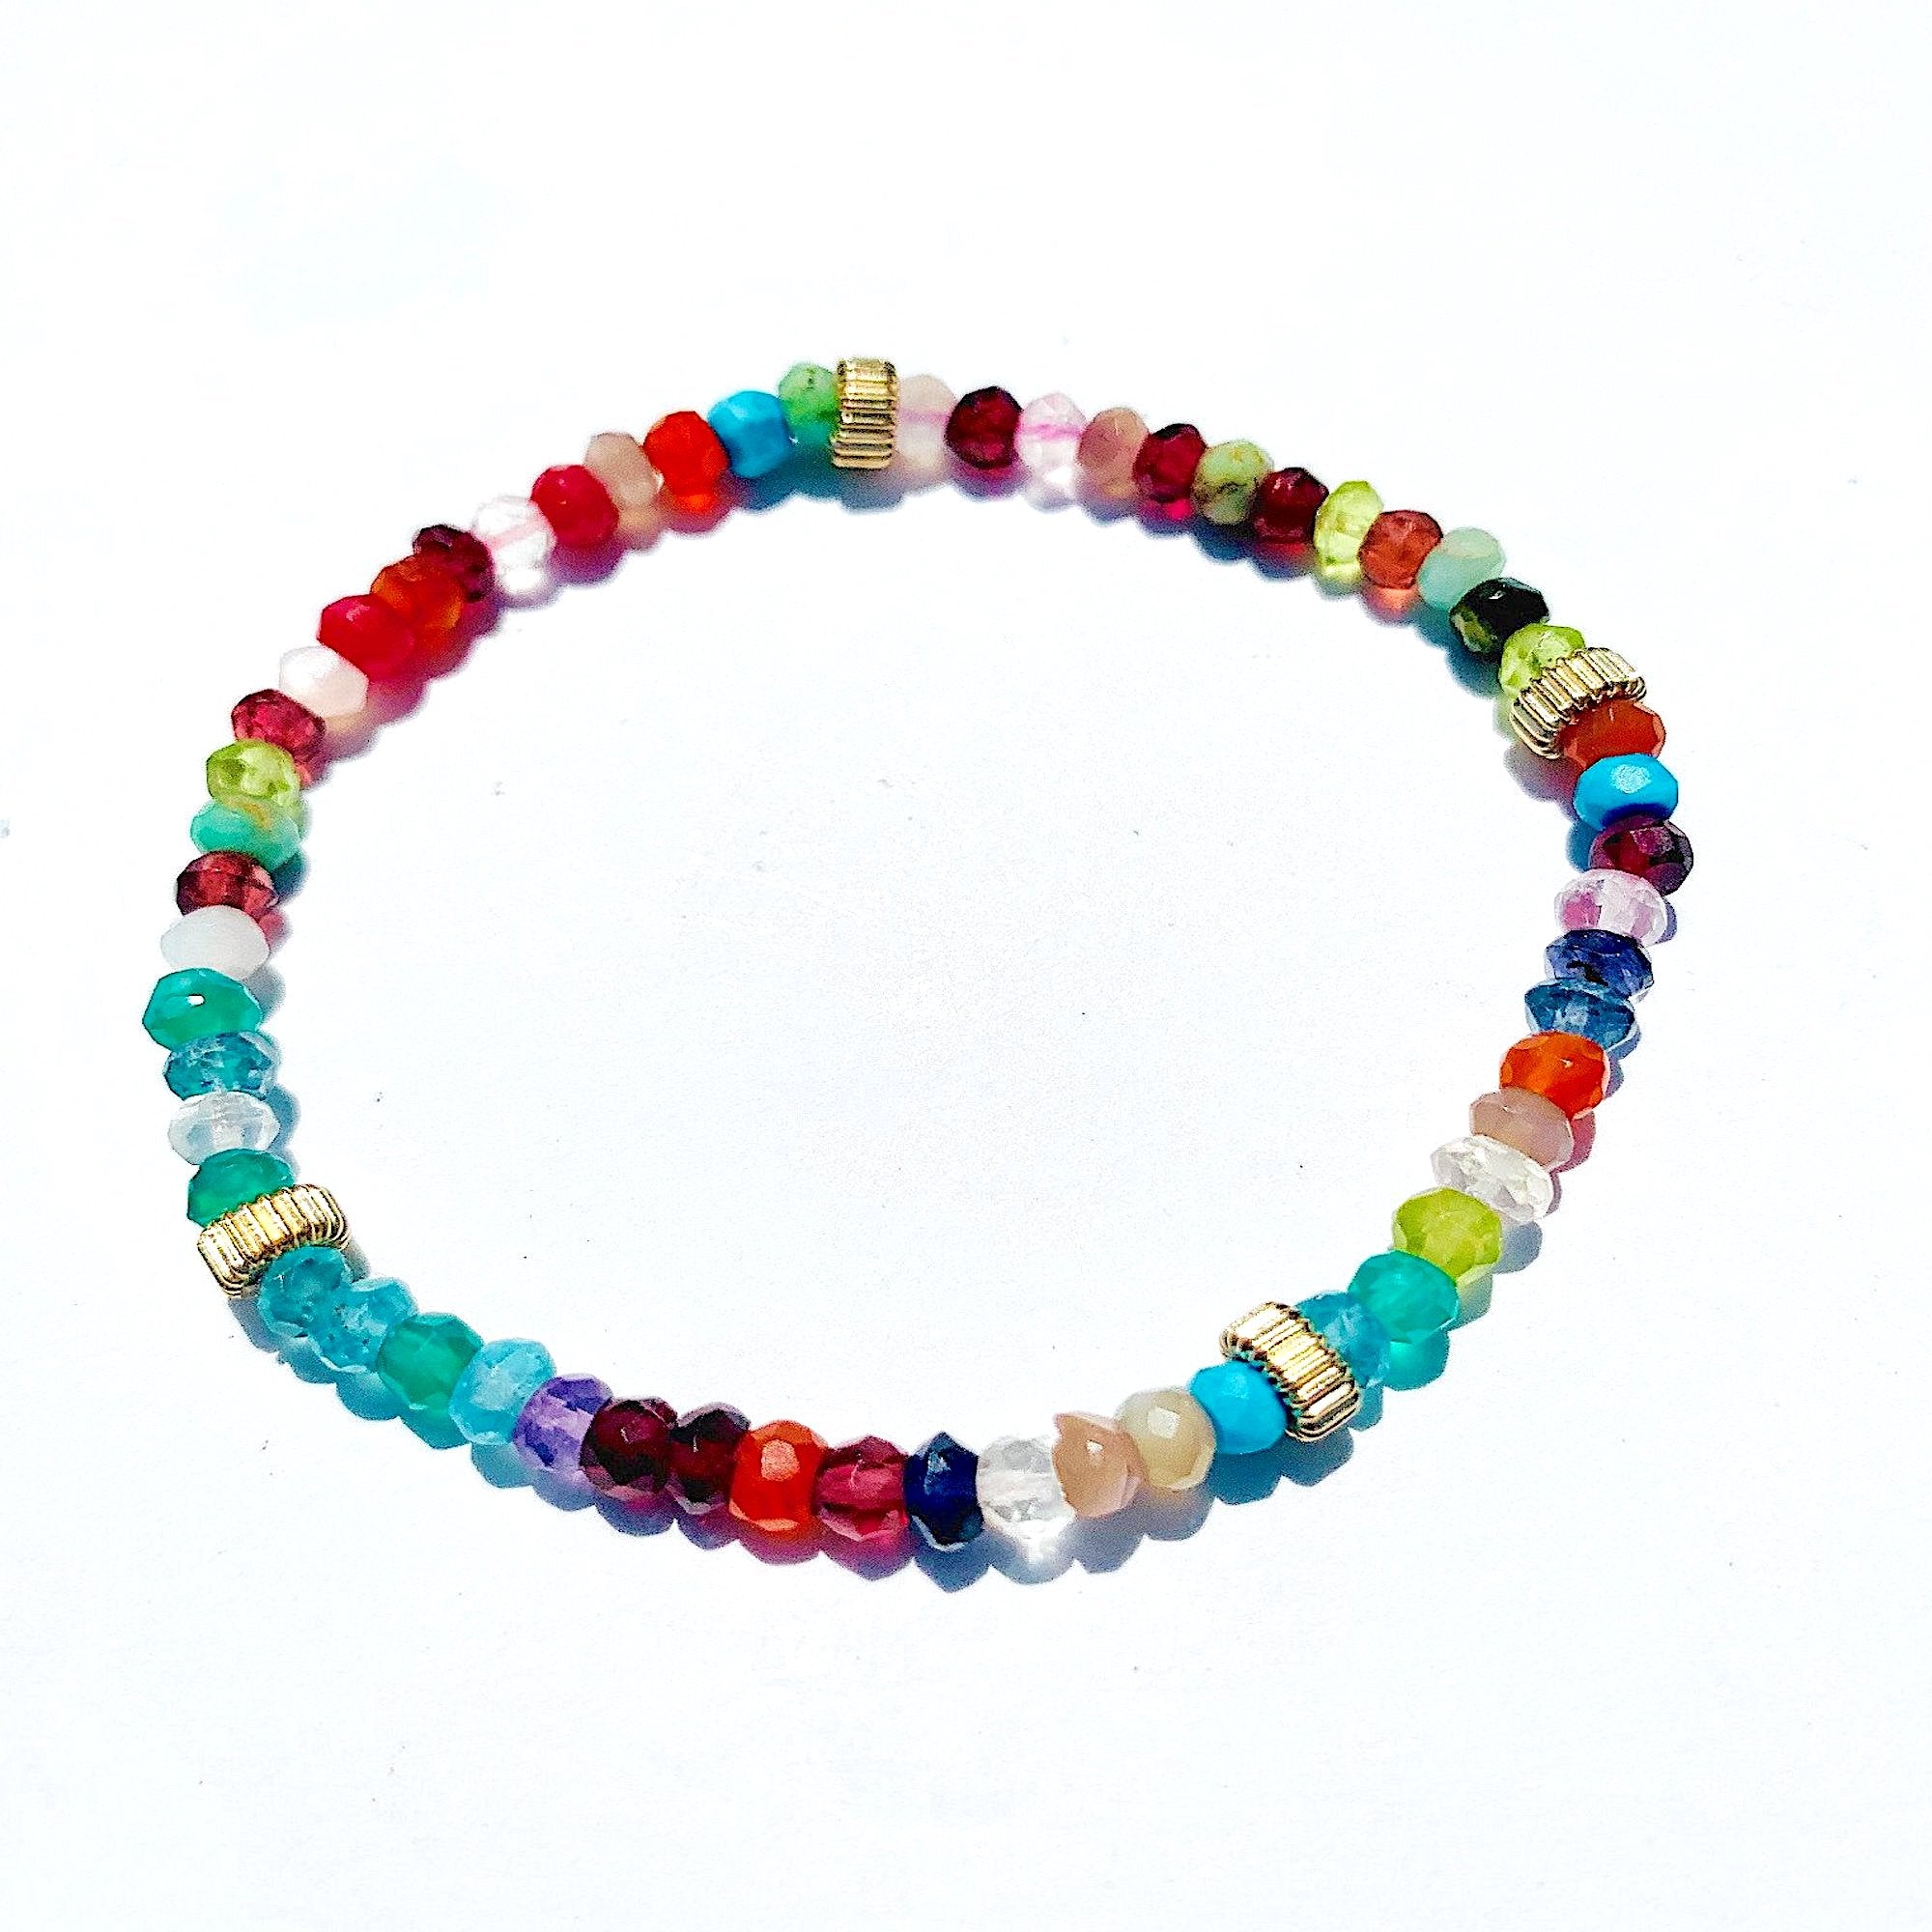 over the rainbow beads